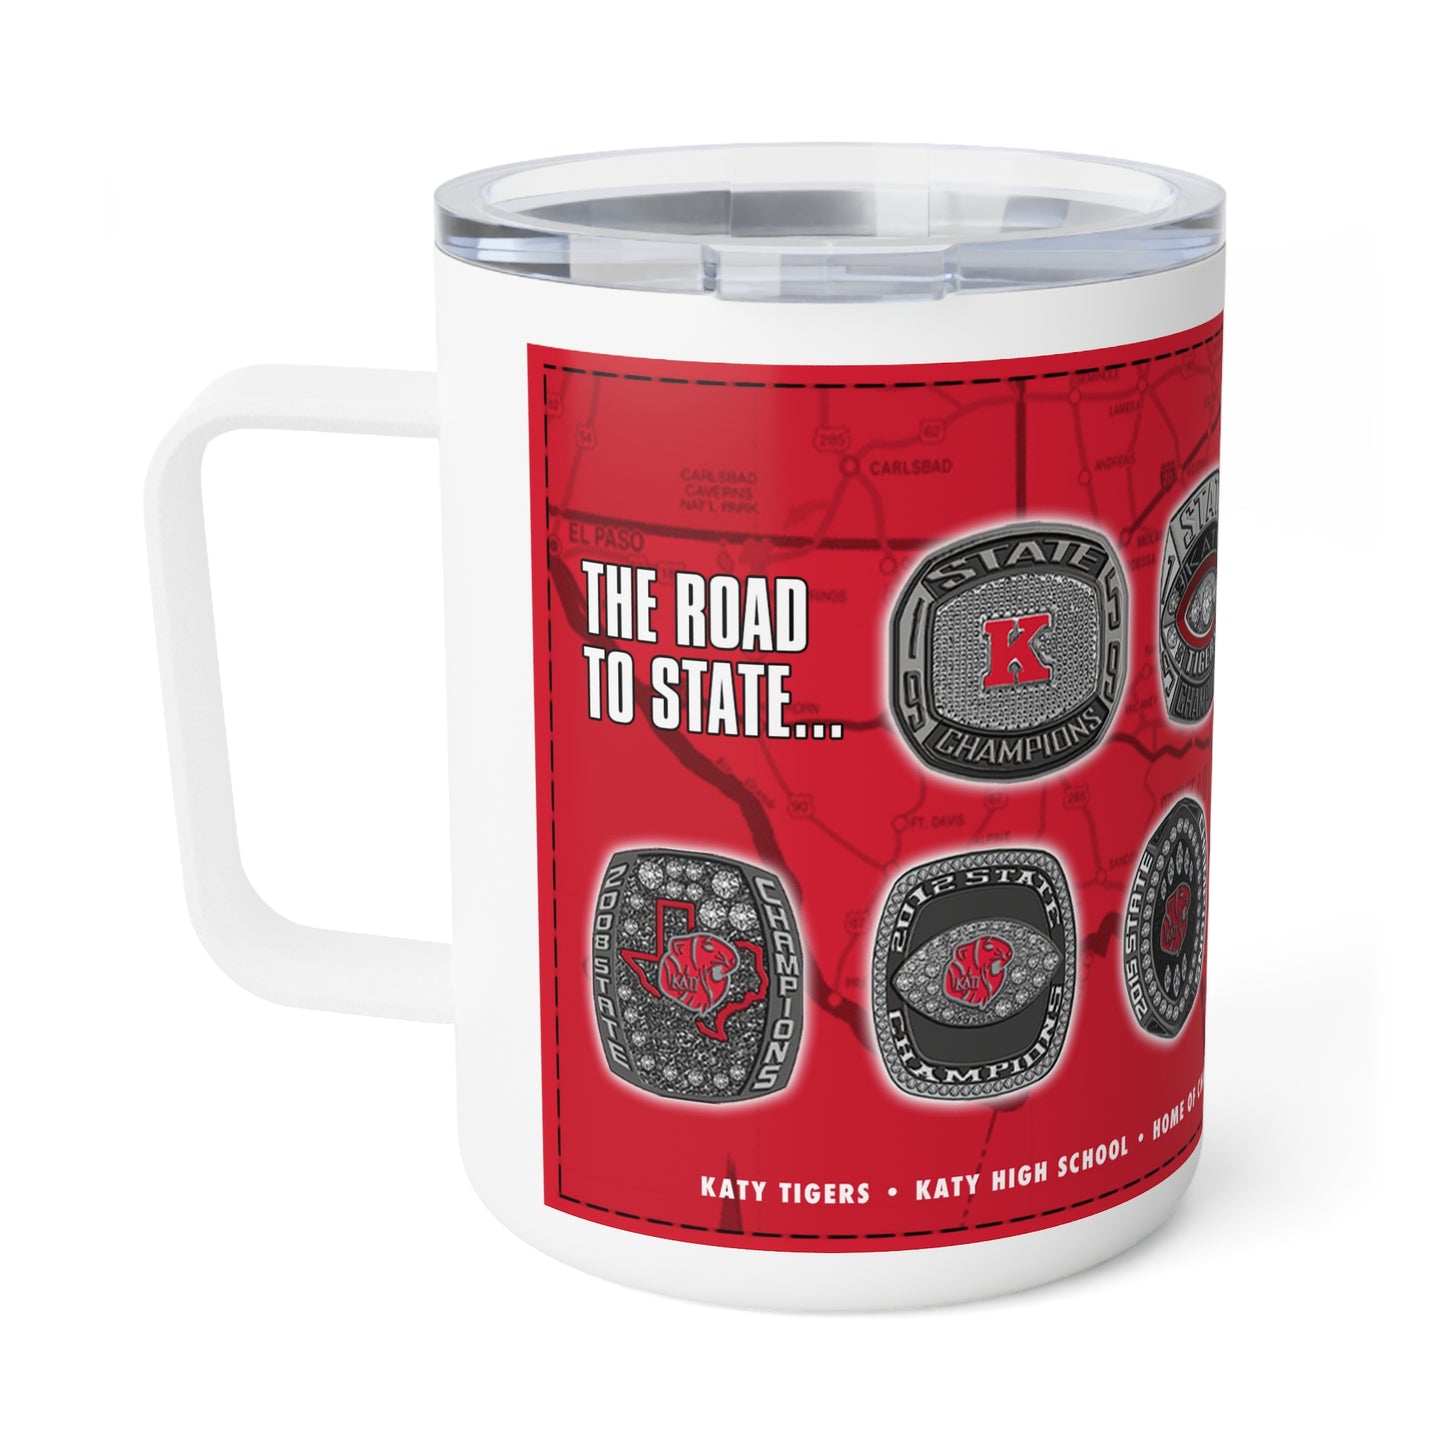 KHS - Road to State Insulated Coffee Mug, 10oz